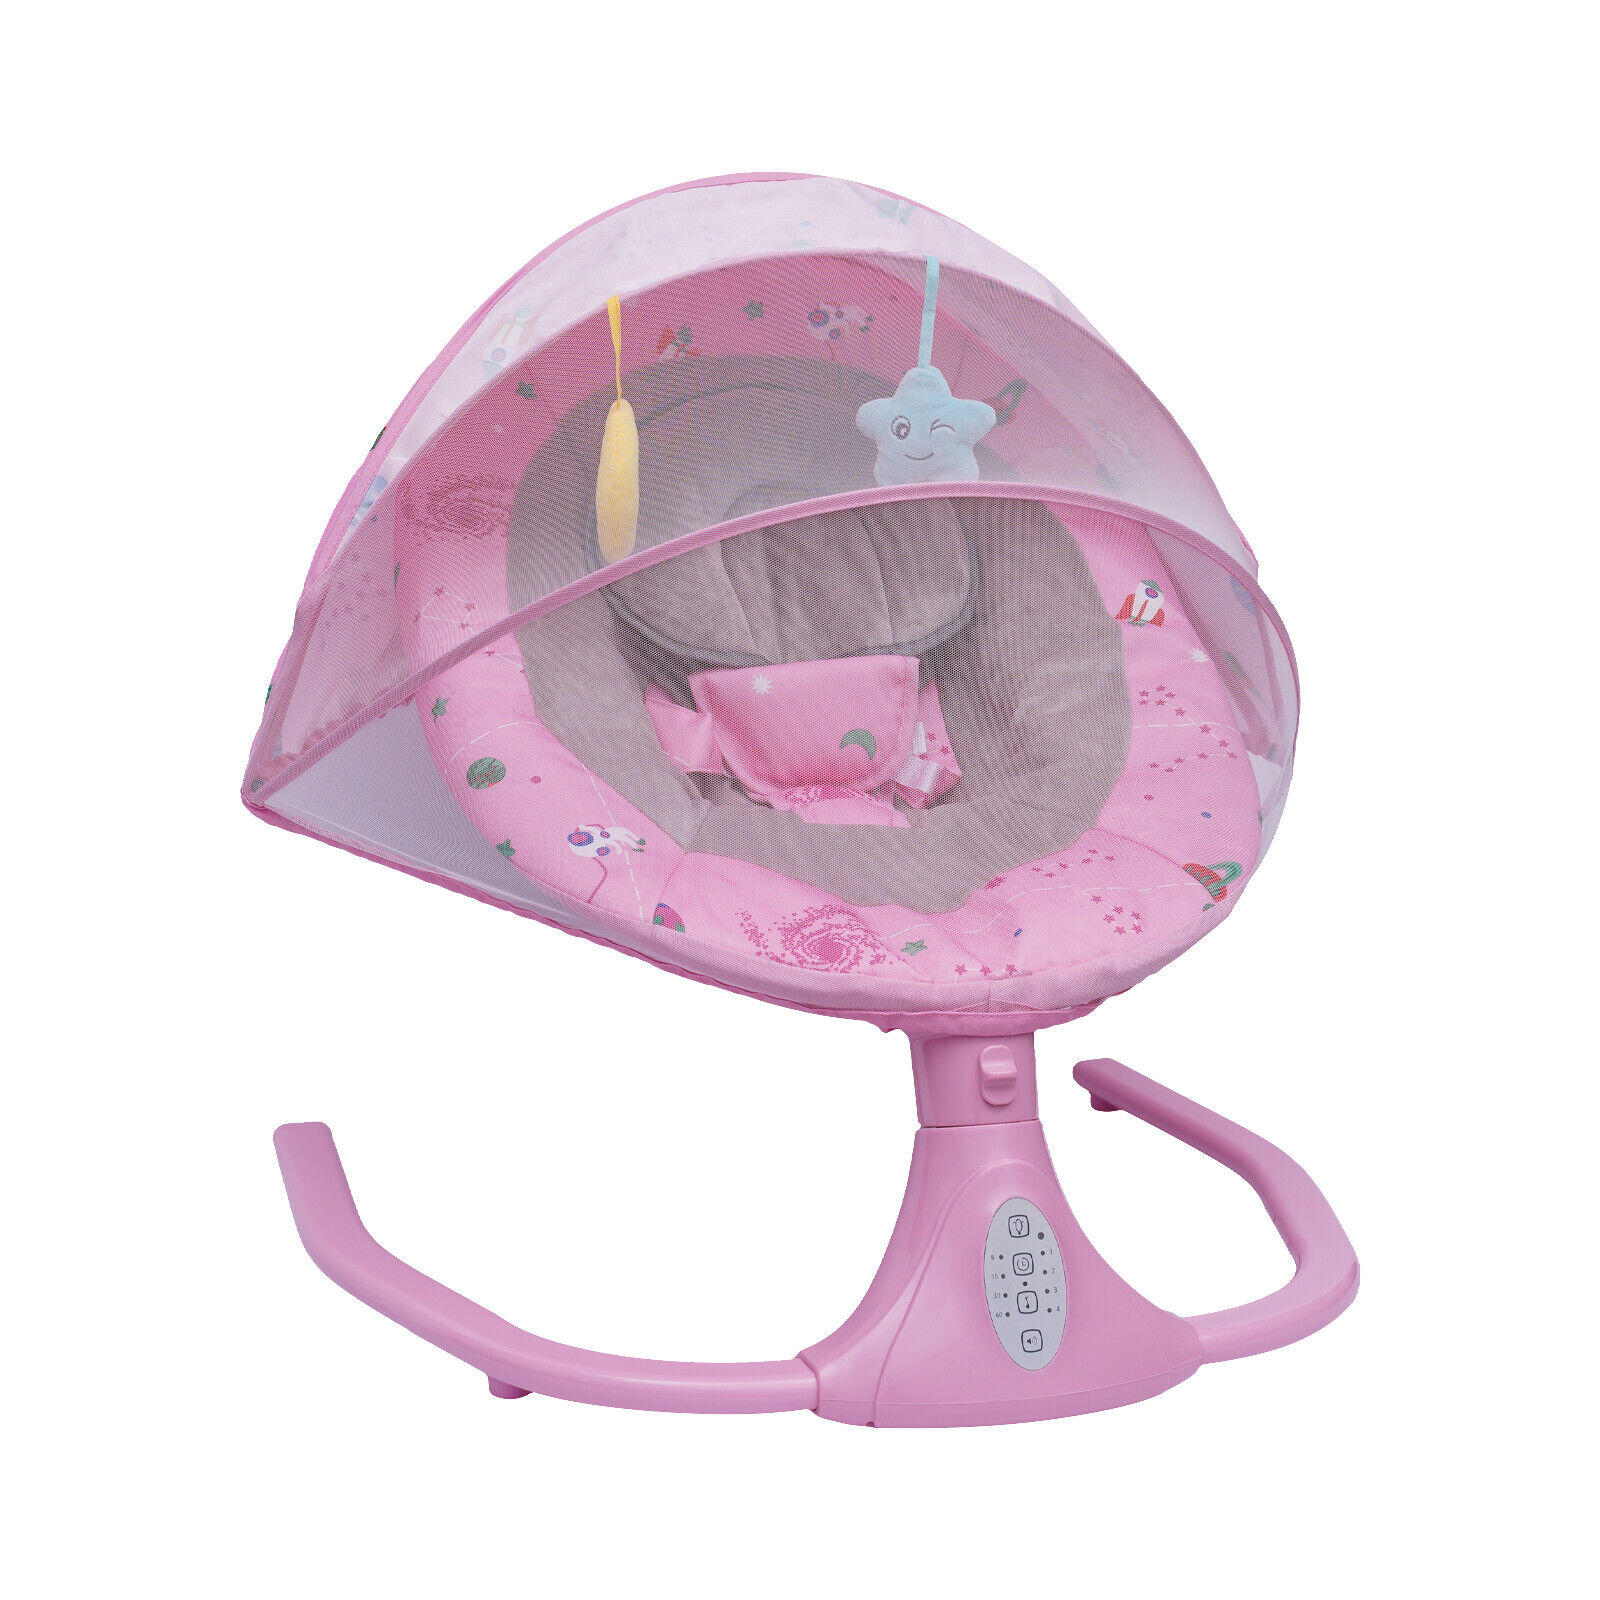 TFCFL Portable Electric Baby Swing Cradle Rocker Newborn Comfort Sleep Chair Crib Music Seat Pink - image 5 of 8